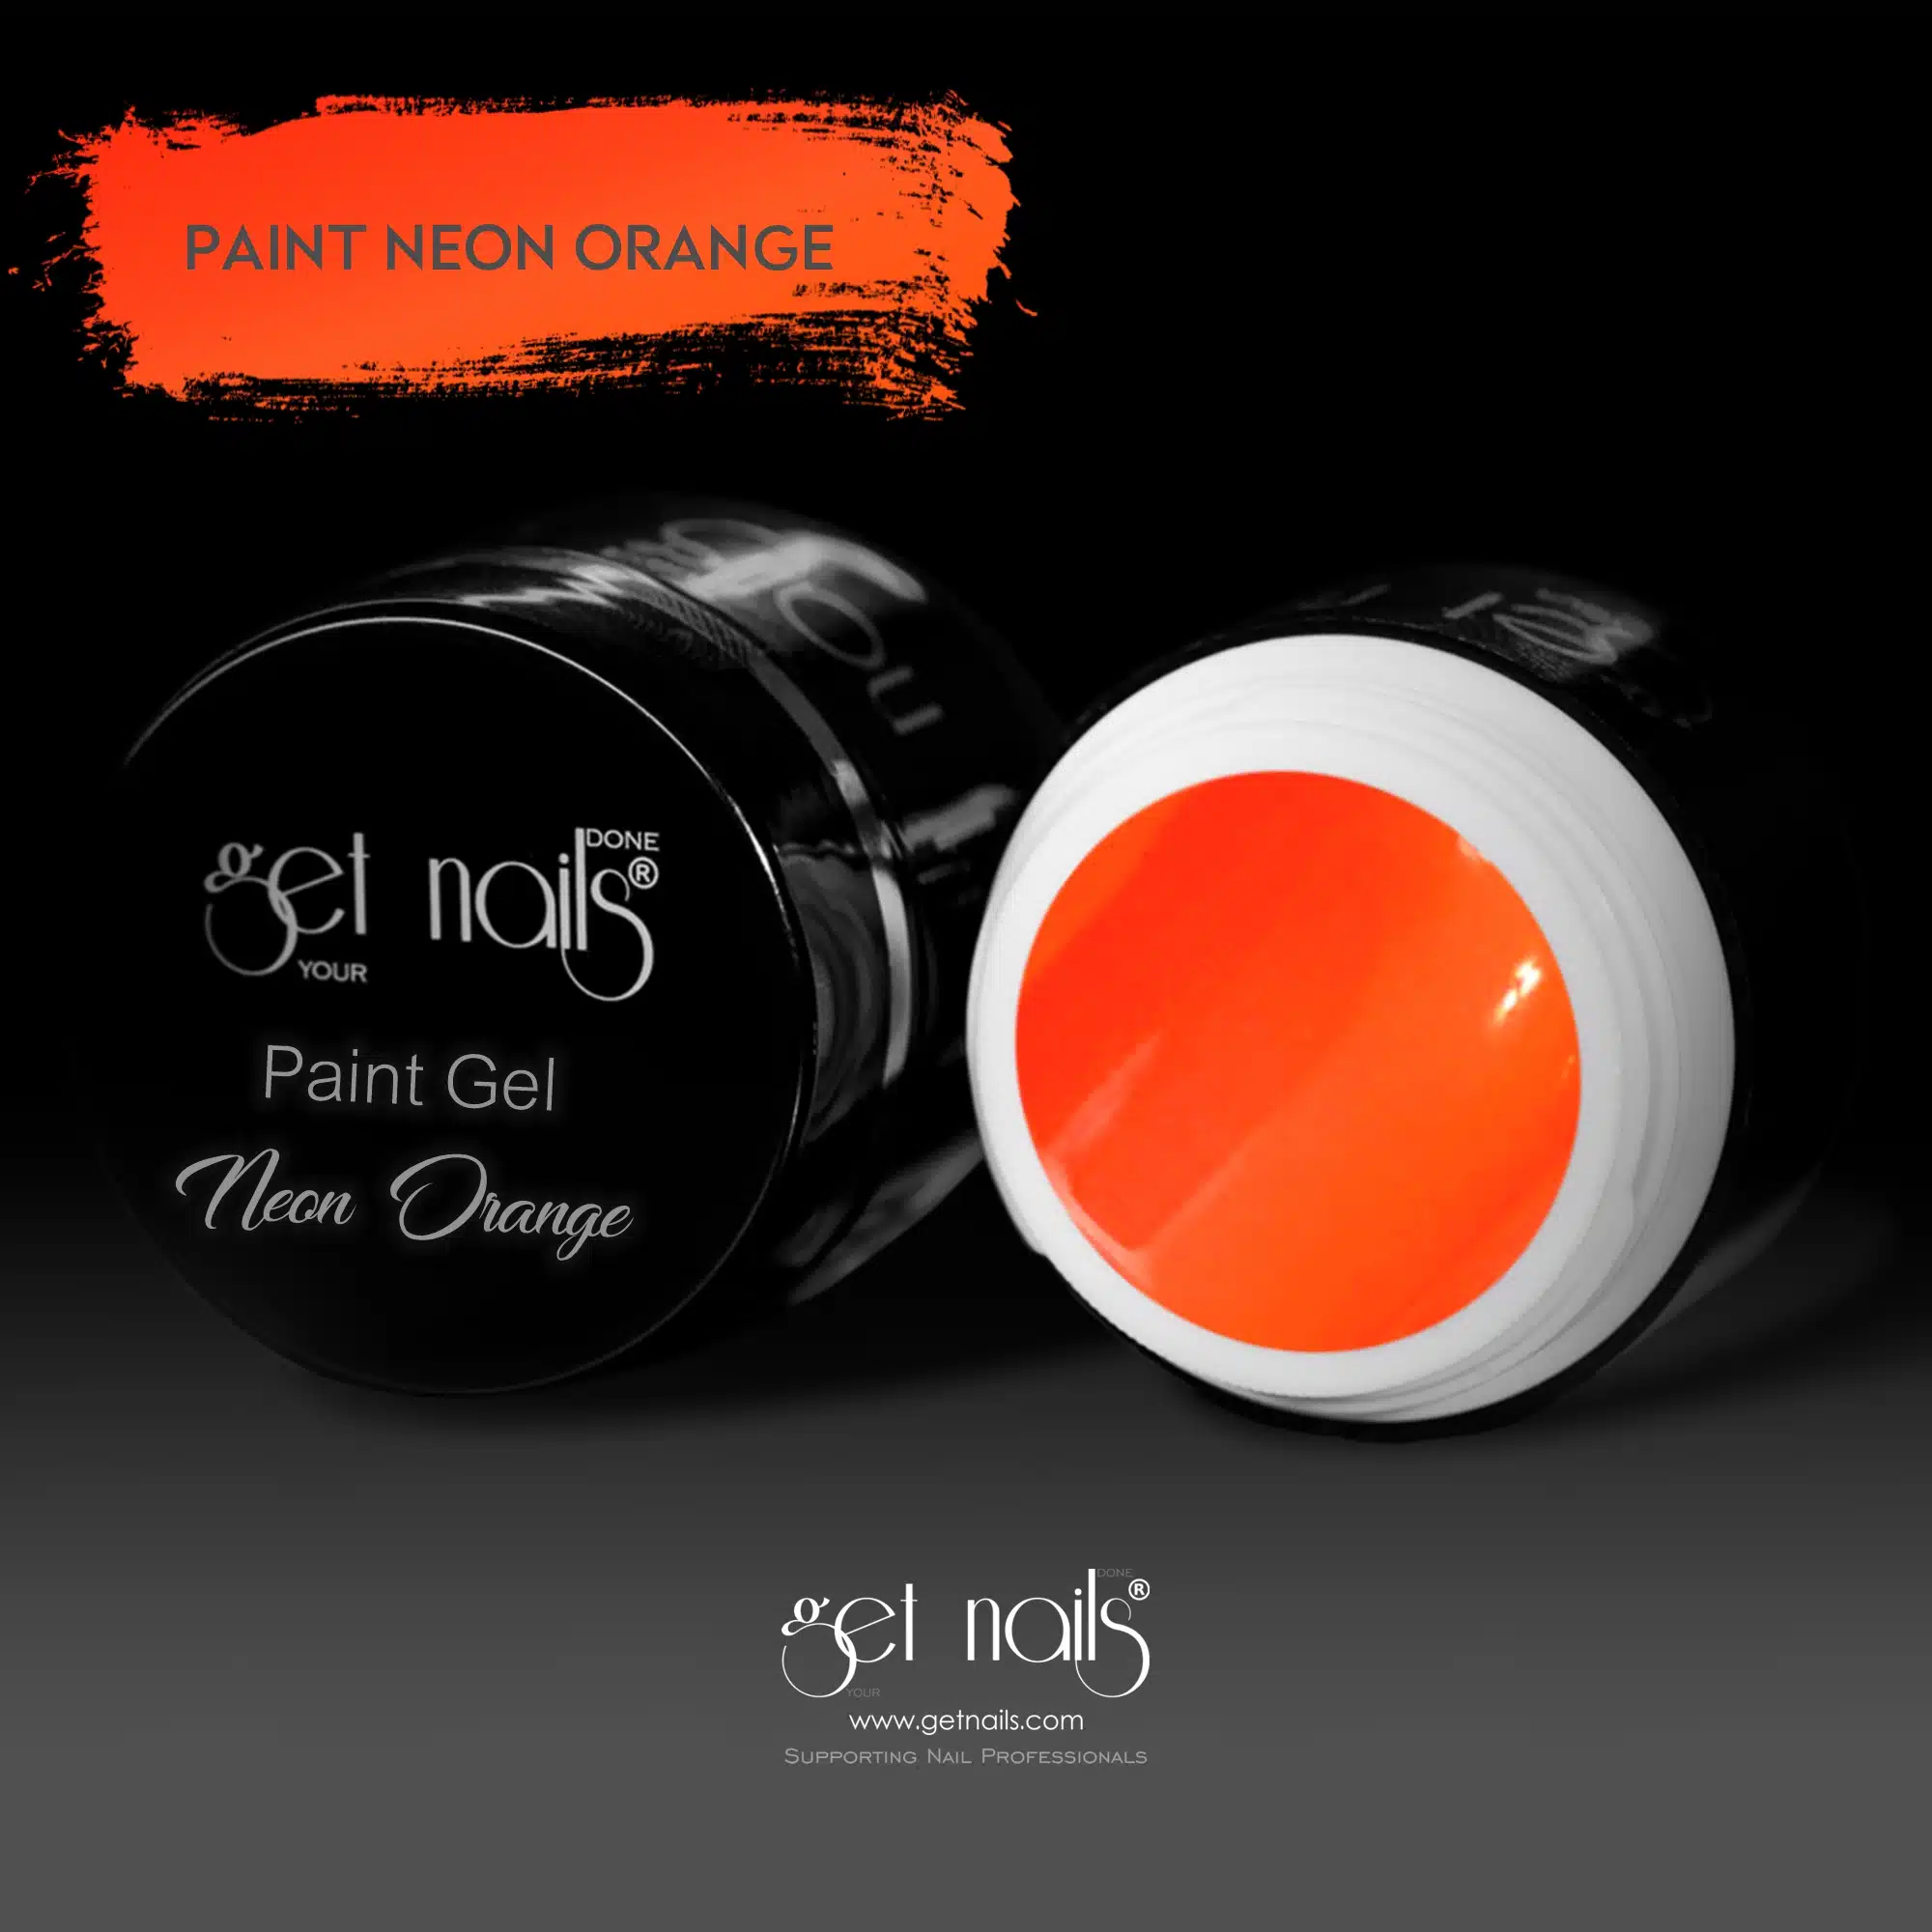 Get Nails Austria - Paint Gel Neon Orange 5g